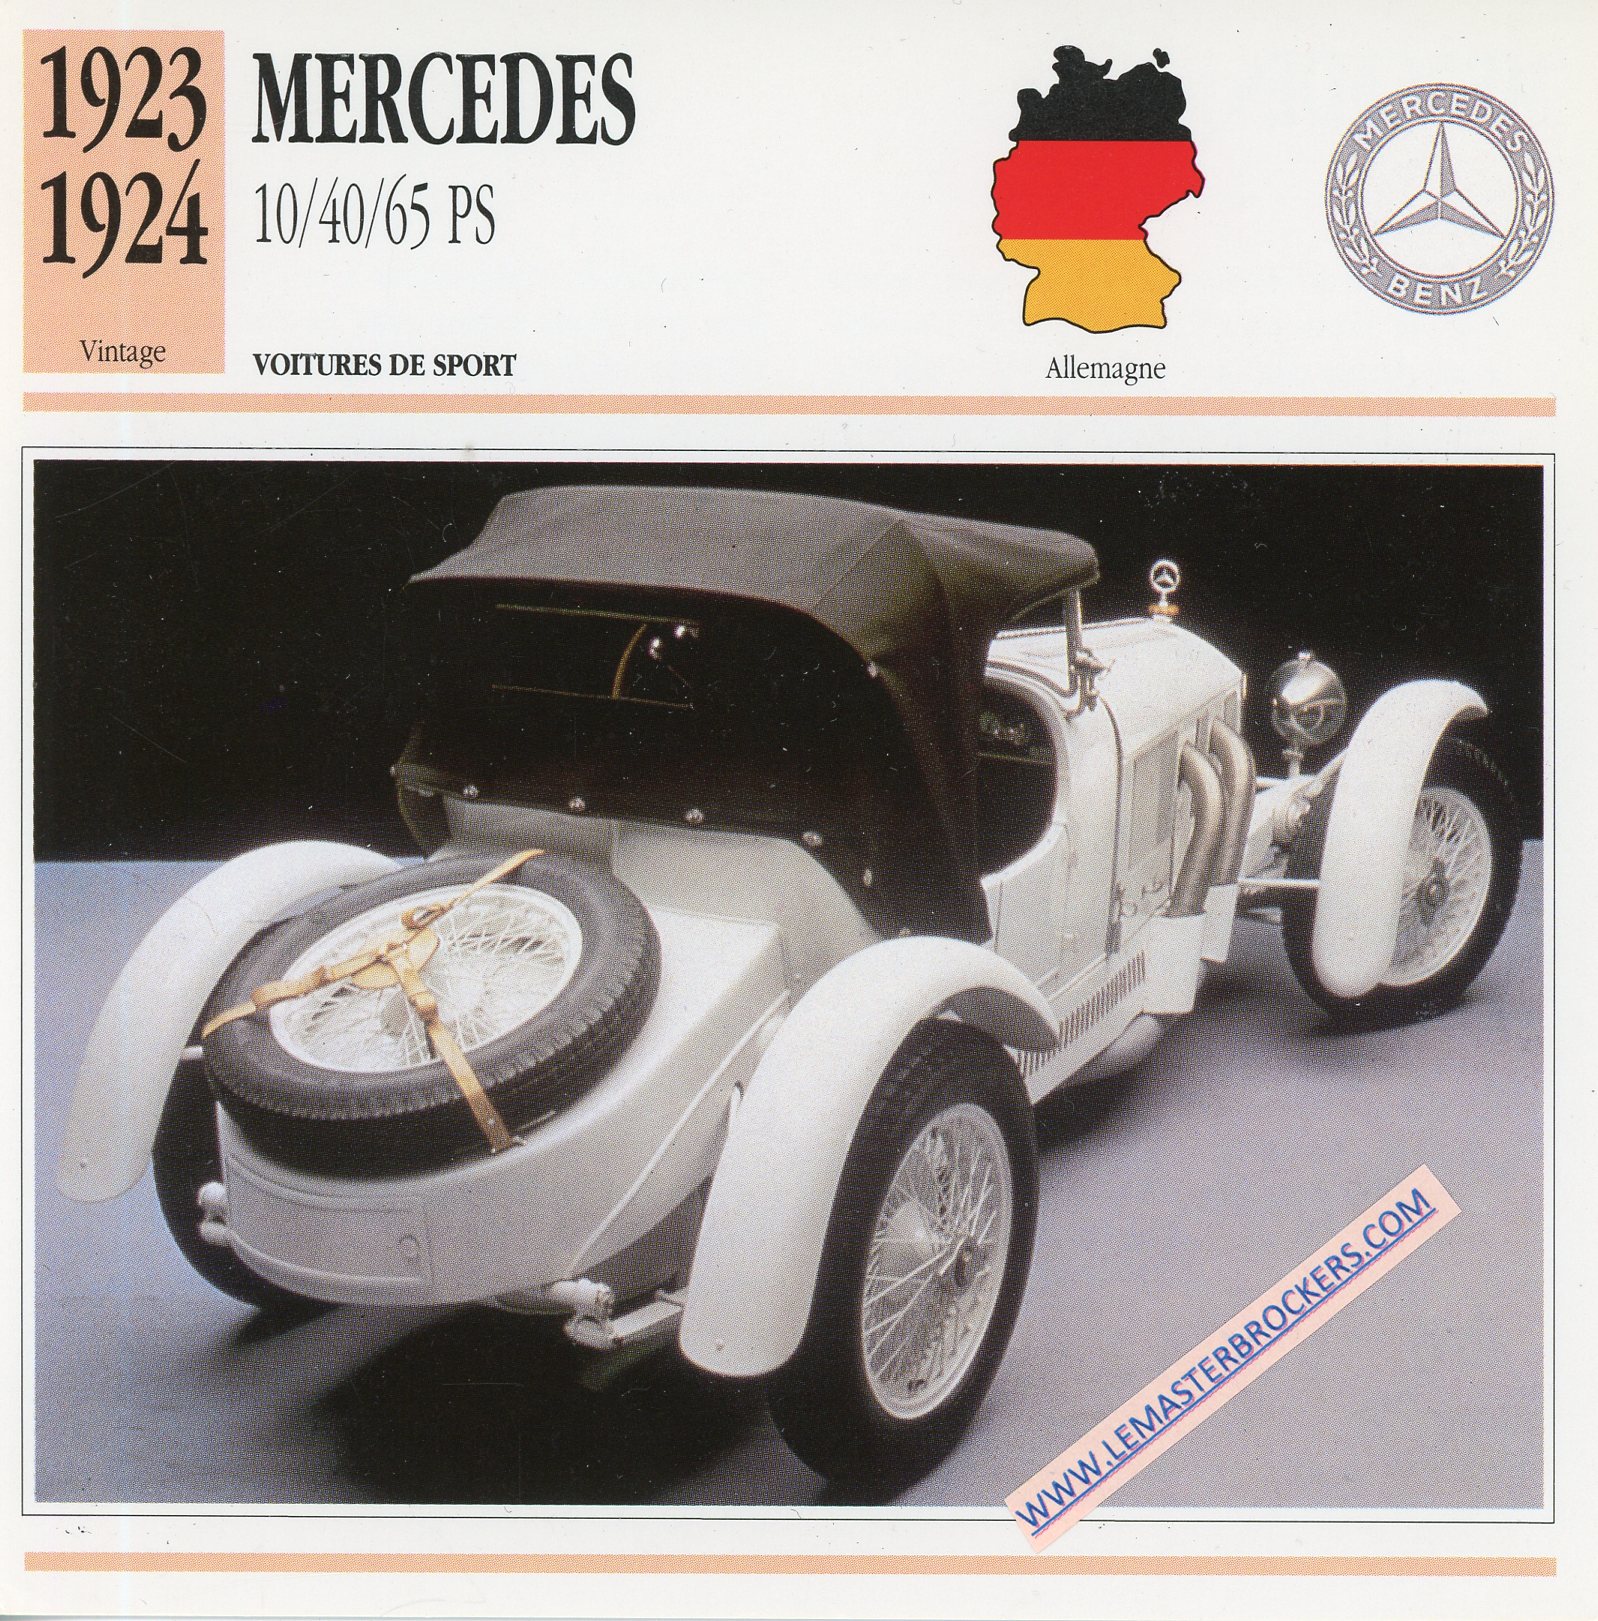 FICHE-AUTO-ATLAS-MERCEDES-SSK-38-250-1927-1933-LEMASTERBROCKERS